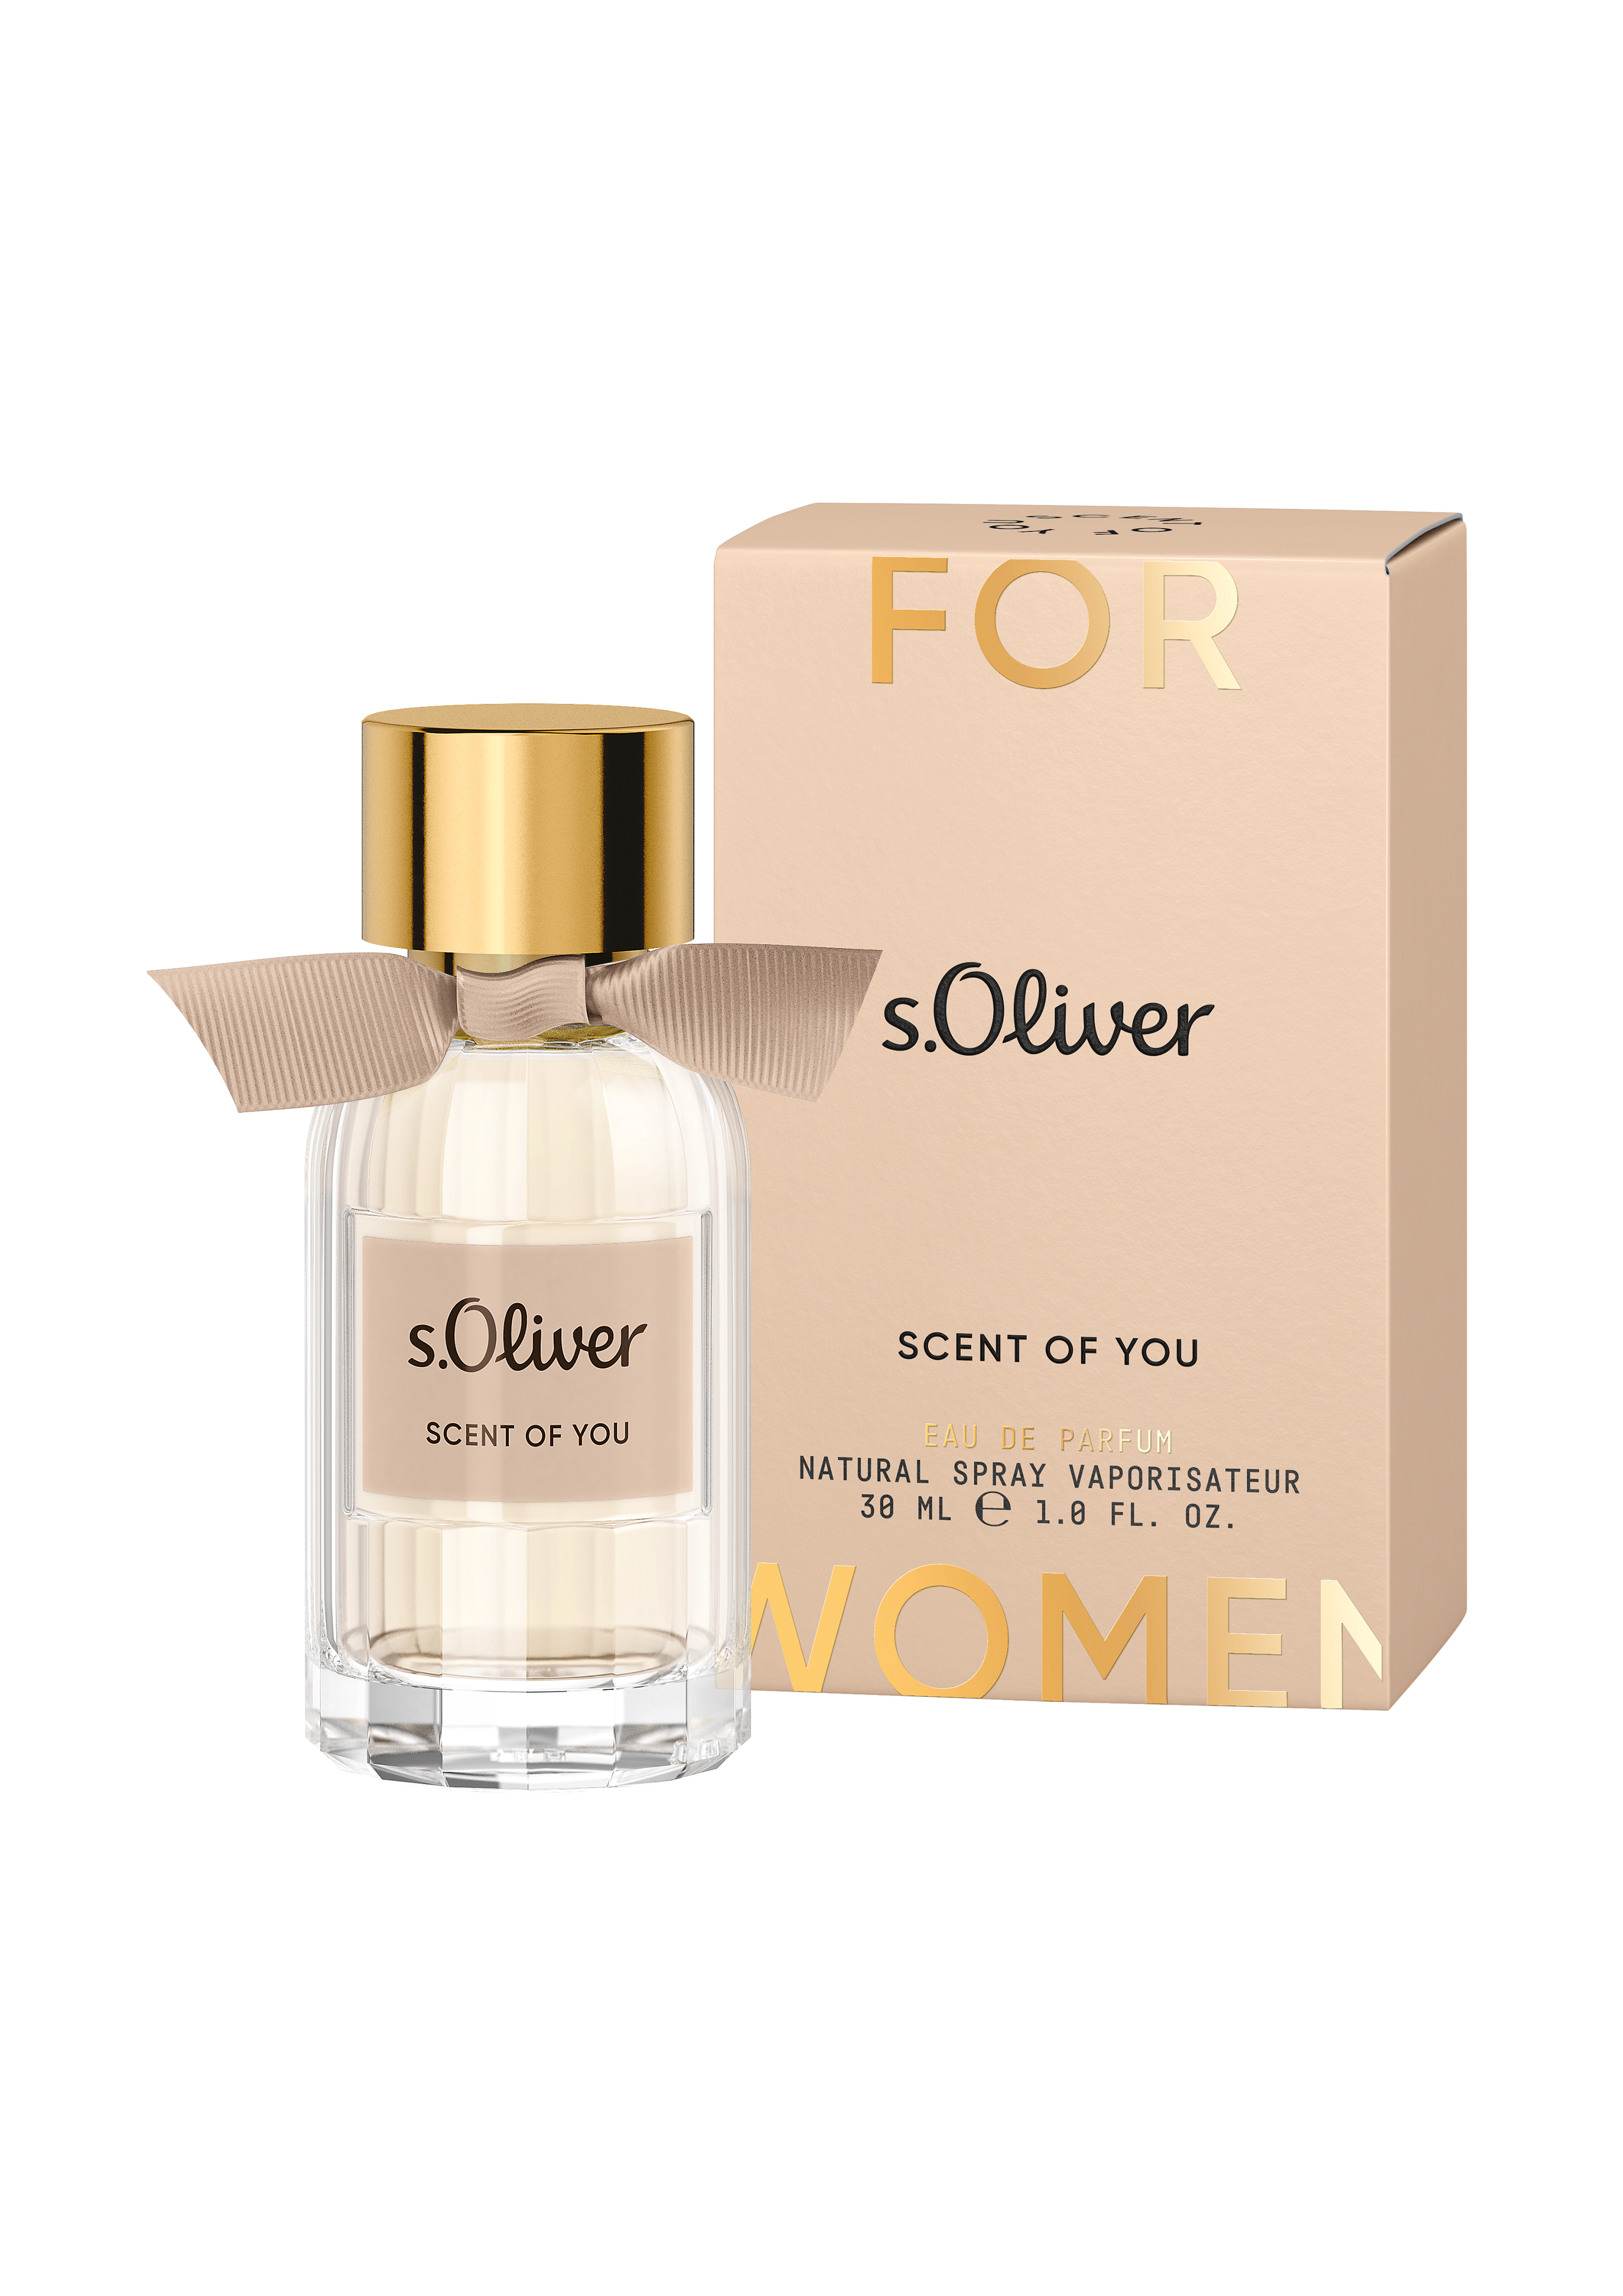 Touhou Onderzoek Chronisch Dames SCENT OF YOU eau de parfum 30 ml - transparent | www.soliver-online.be